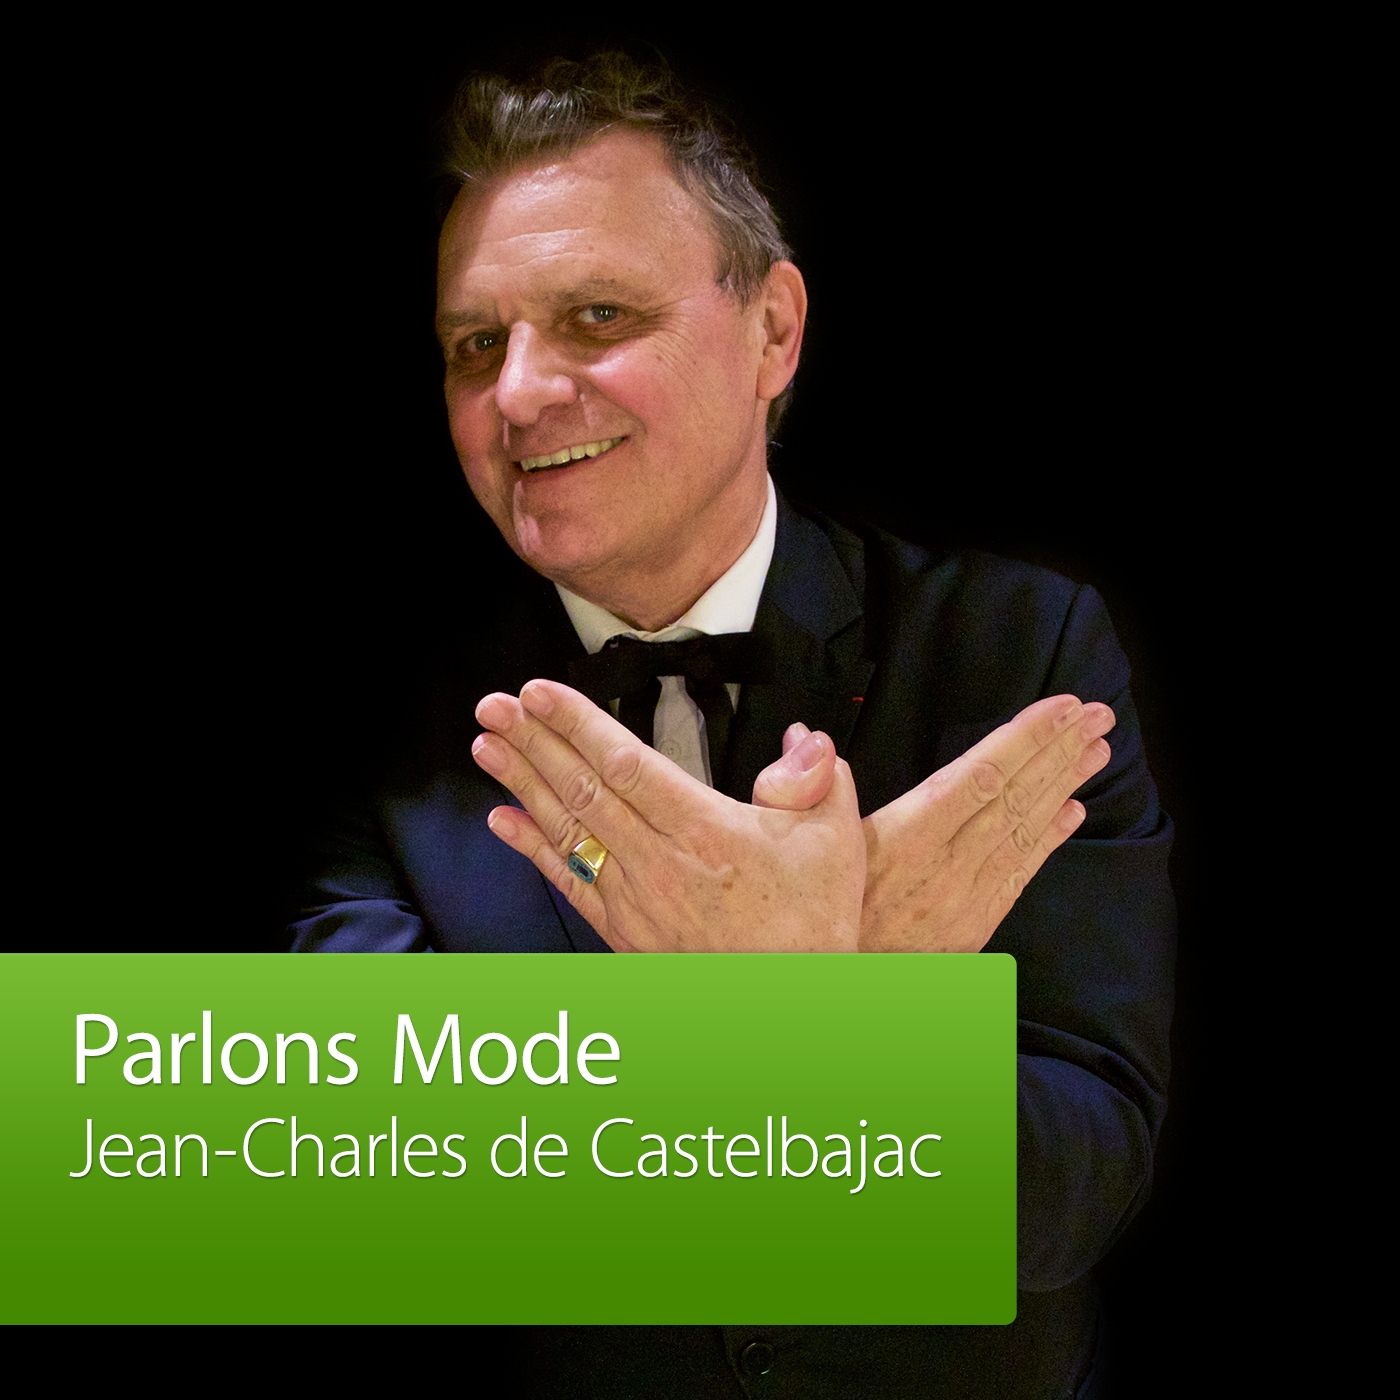 Parlons Mode: Jean-Charles de Castelbajac